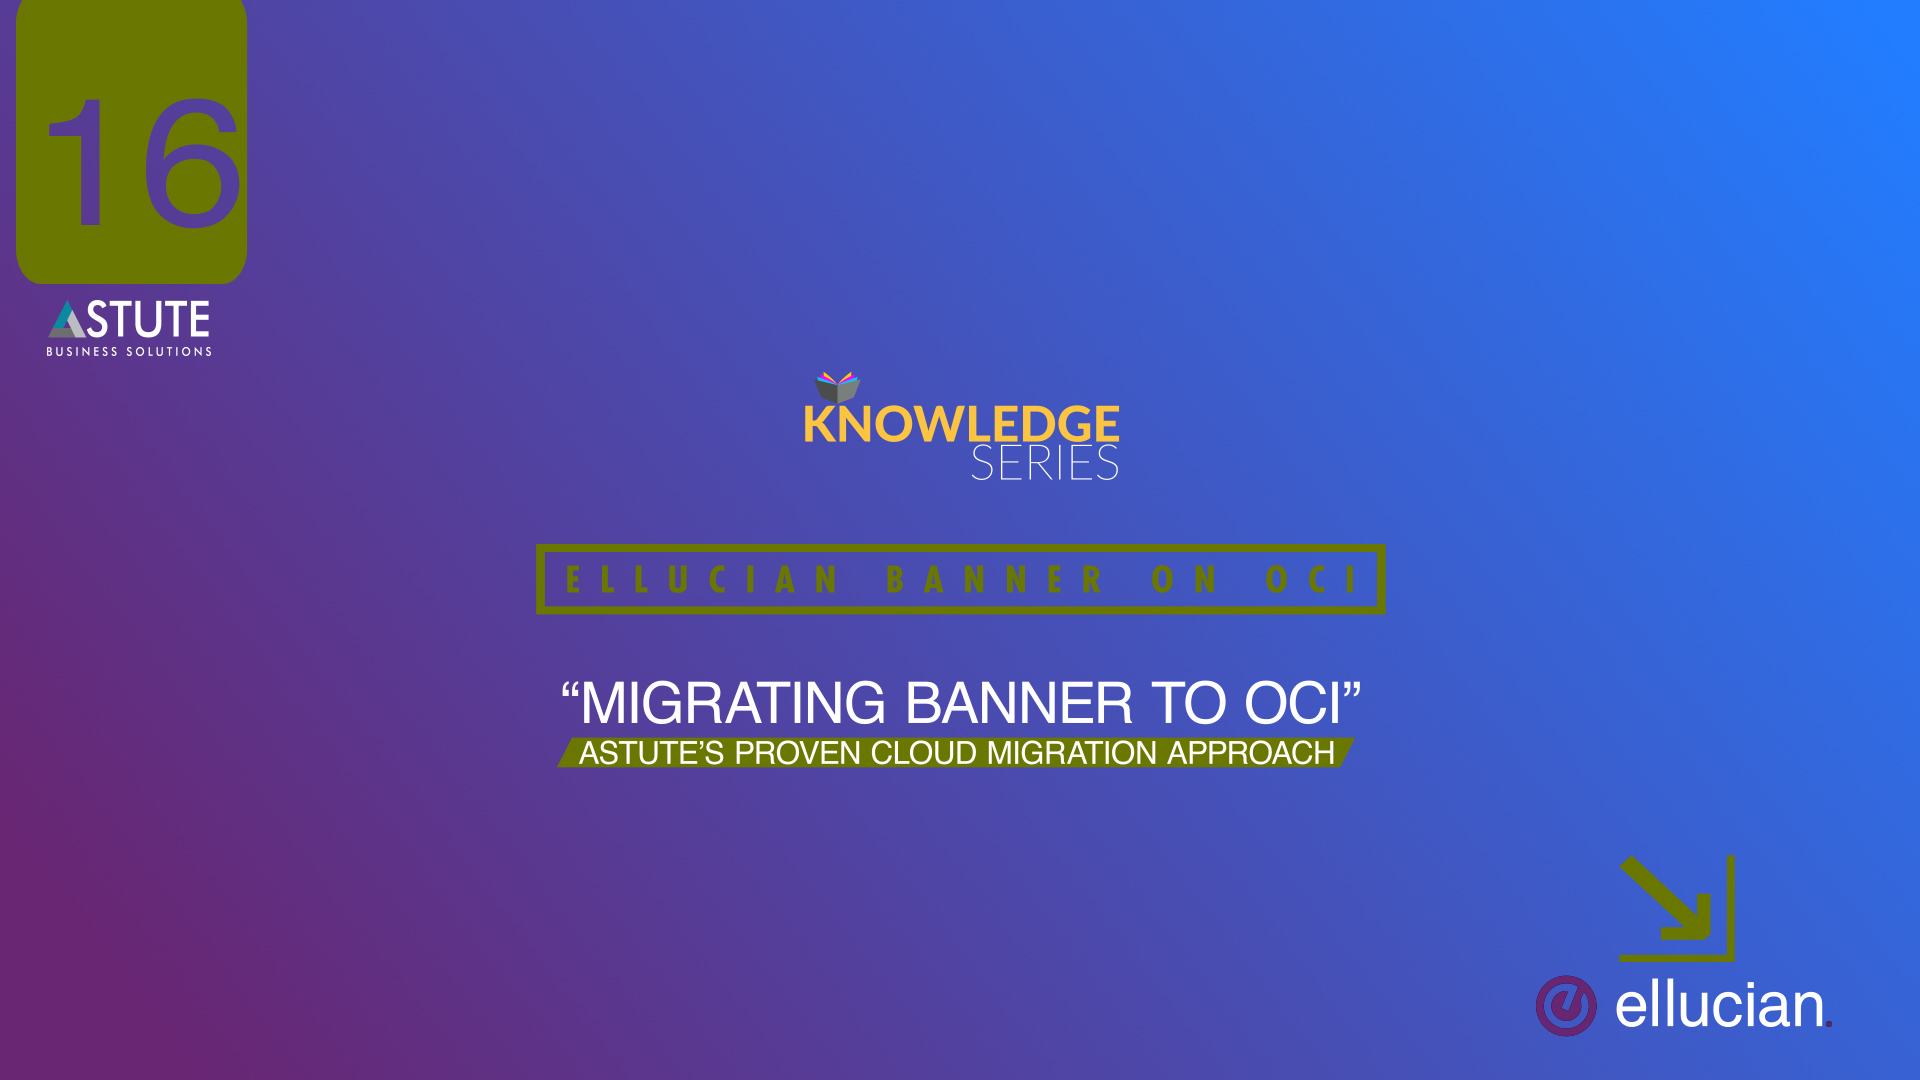 #16 Ellucian _Migrating Banner To OCI- AstuteΓÇÖs Proven Cloud Migration Approach